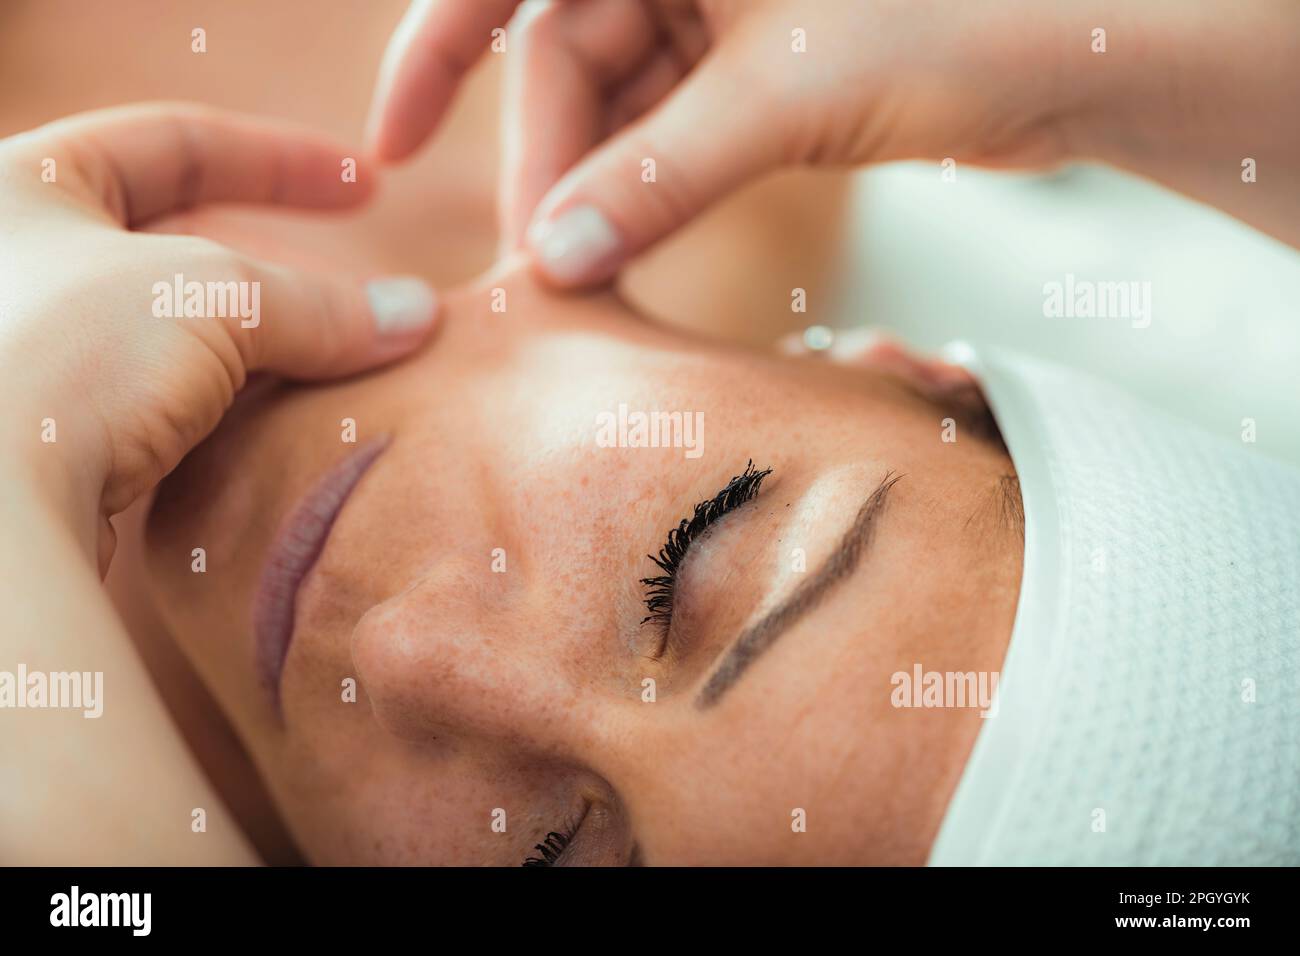 Face lifting massage Stock Photo